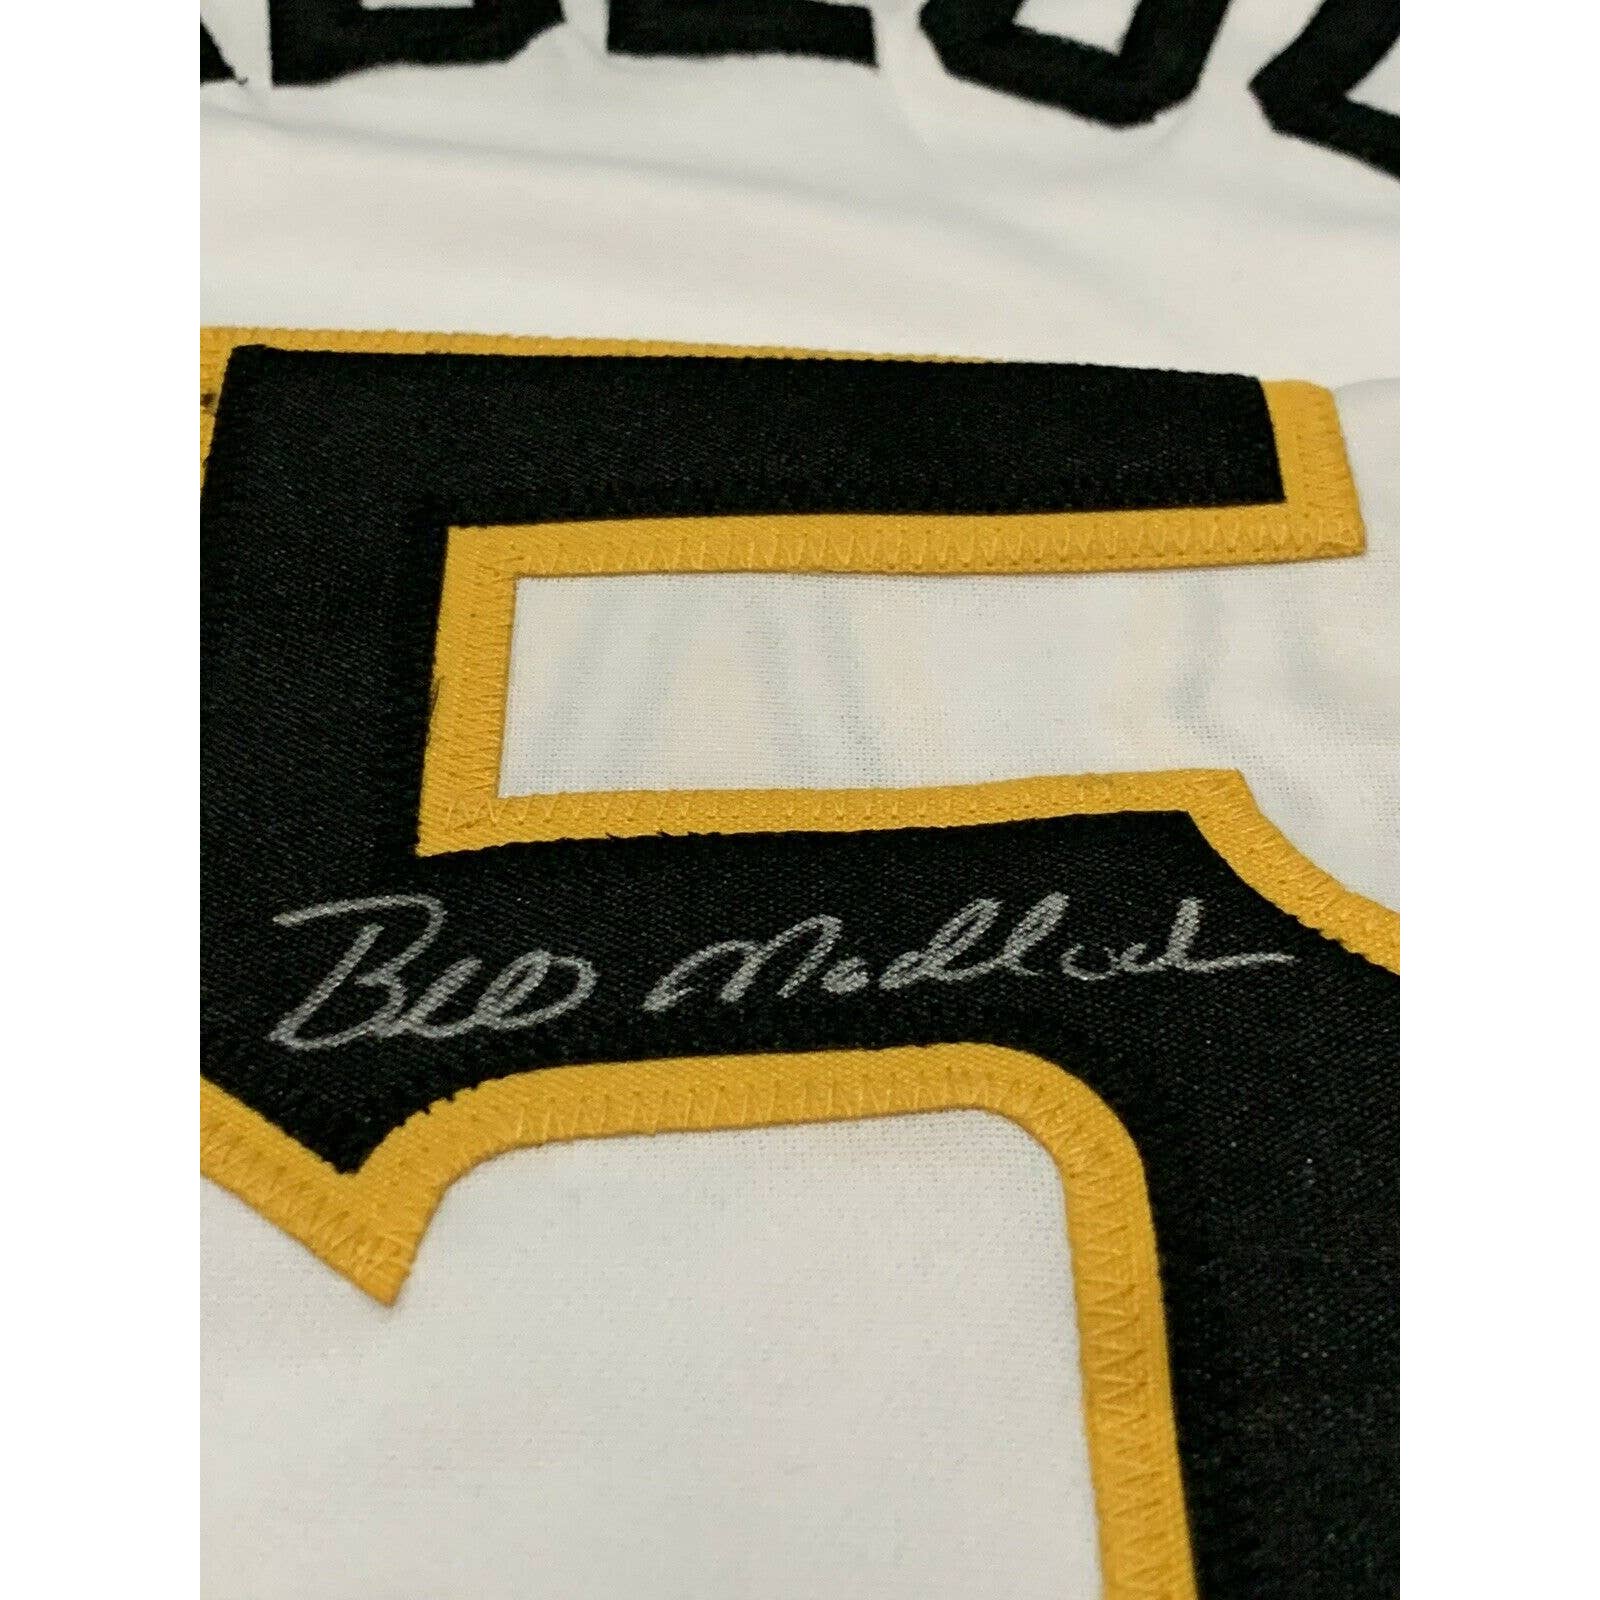 Bill Madlock Autographed/Signed Jersey JSA COA Pittsburgh Pirates - TreasuresEvolved